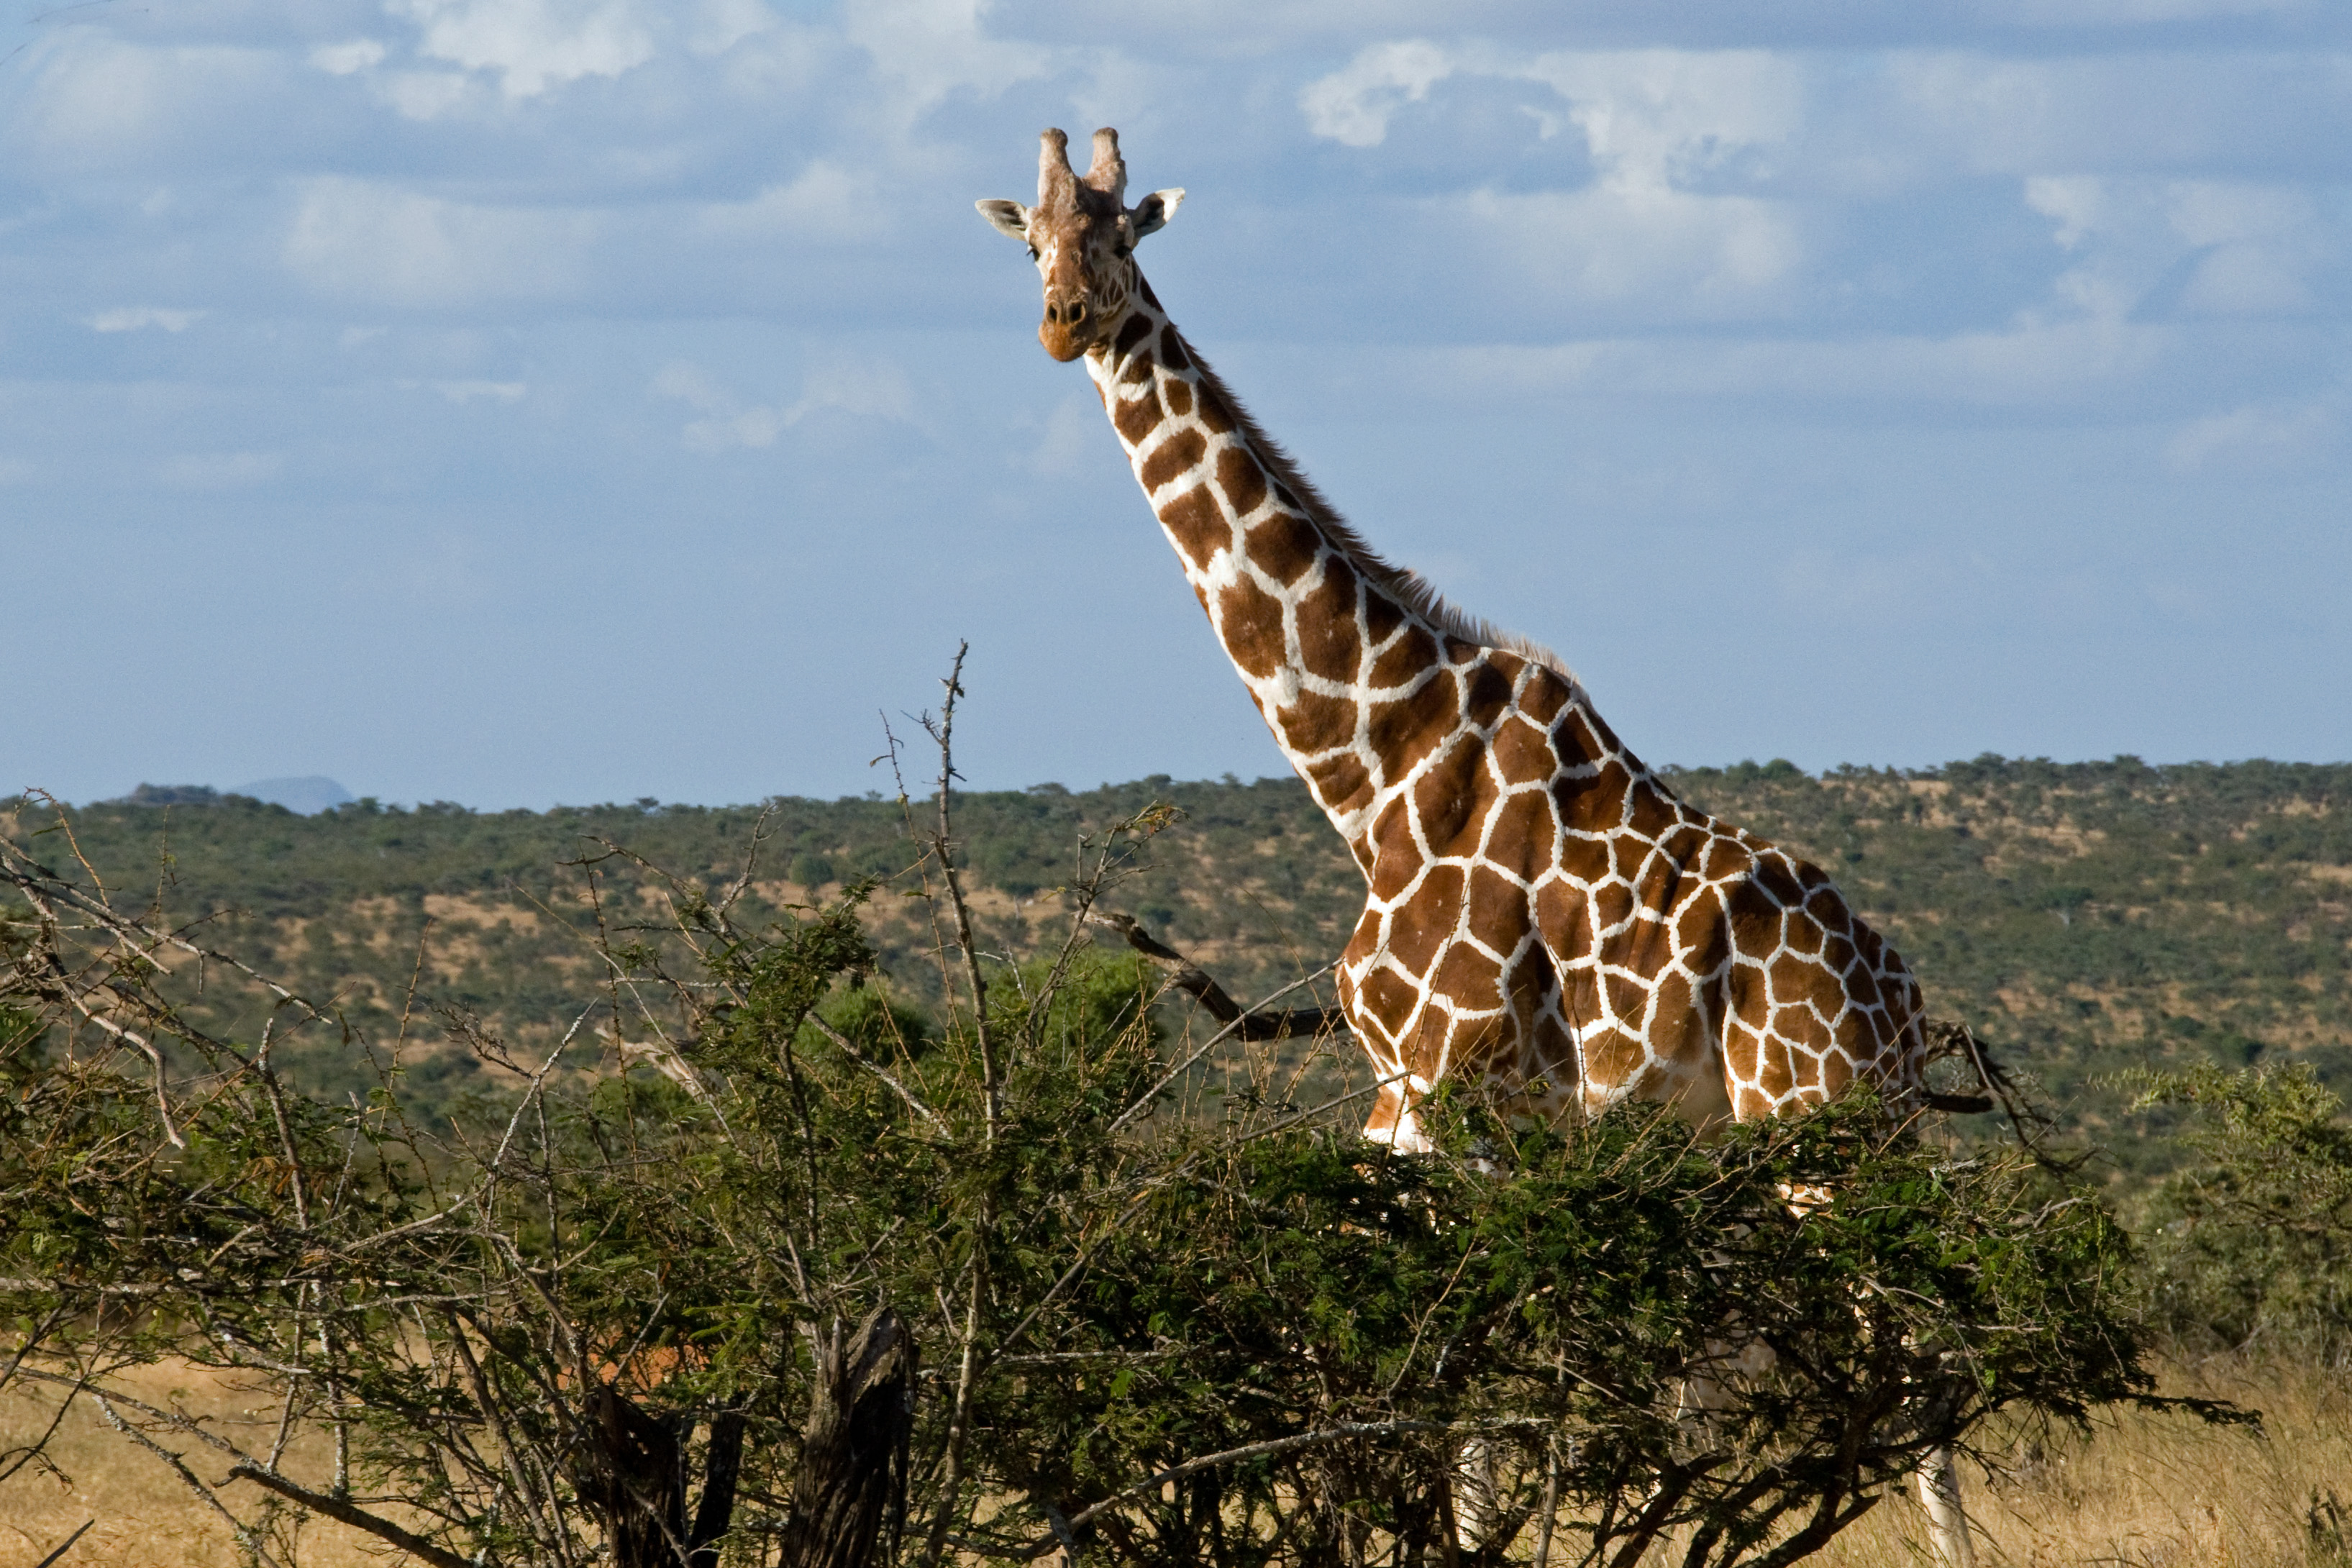 Giant giraffe photo